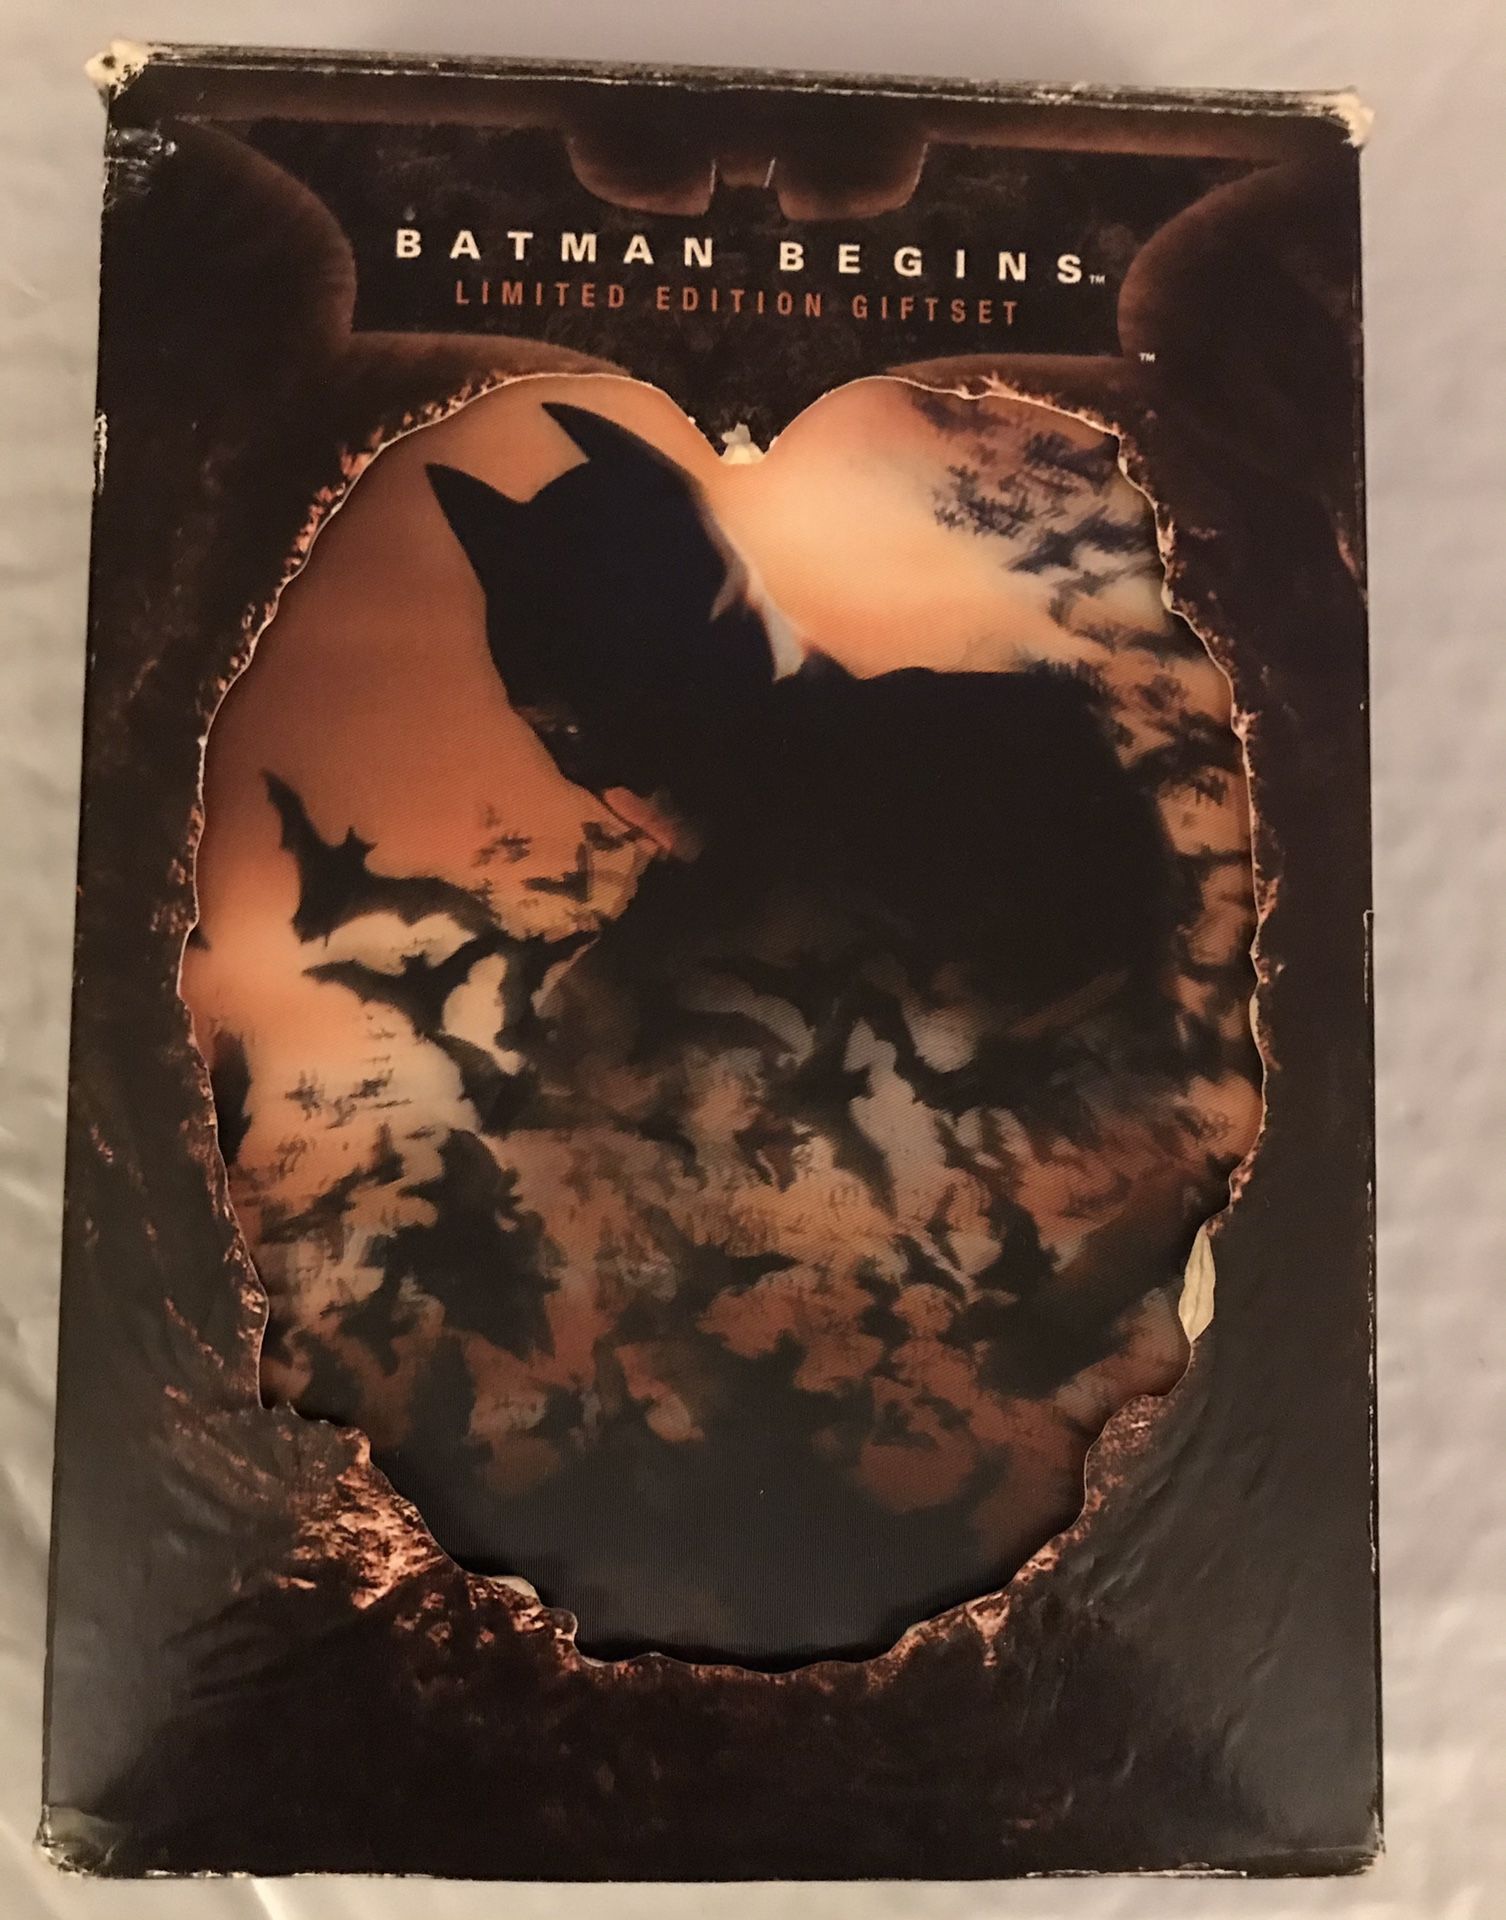 The Batman Begins Limited Edition DVD Gift Set